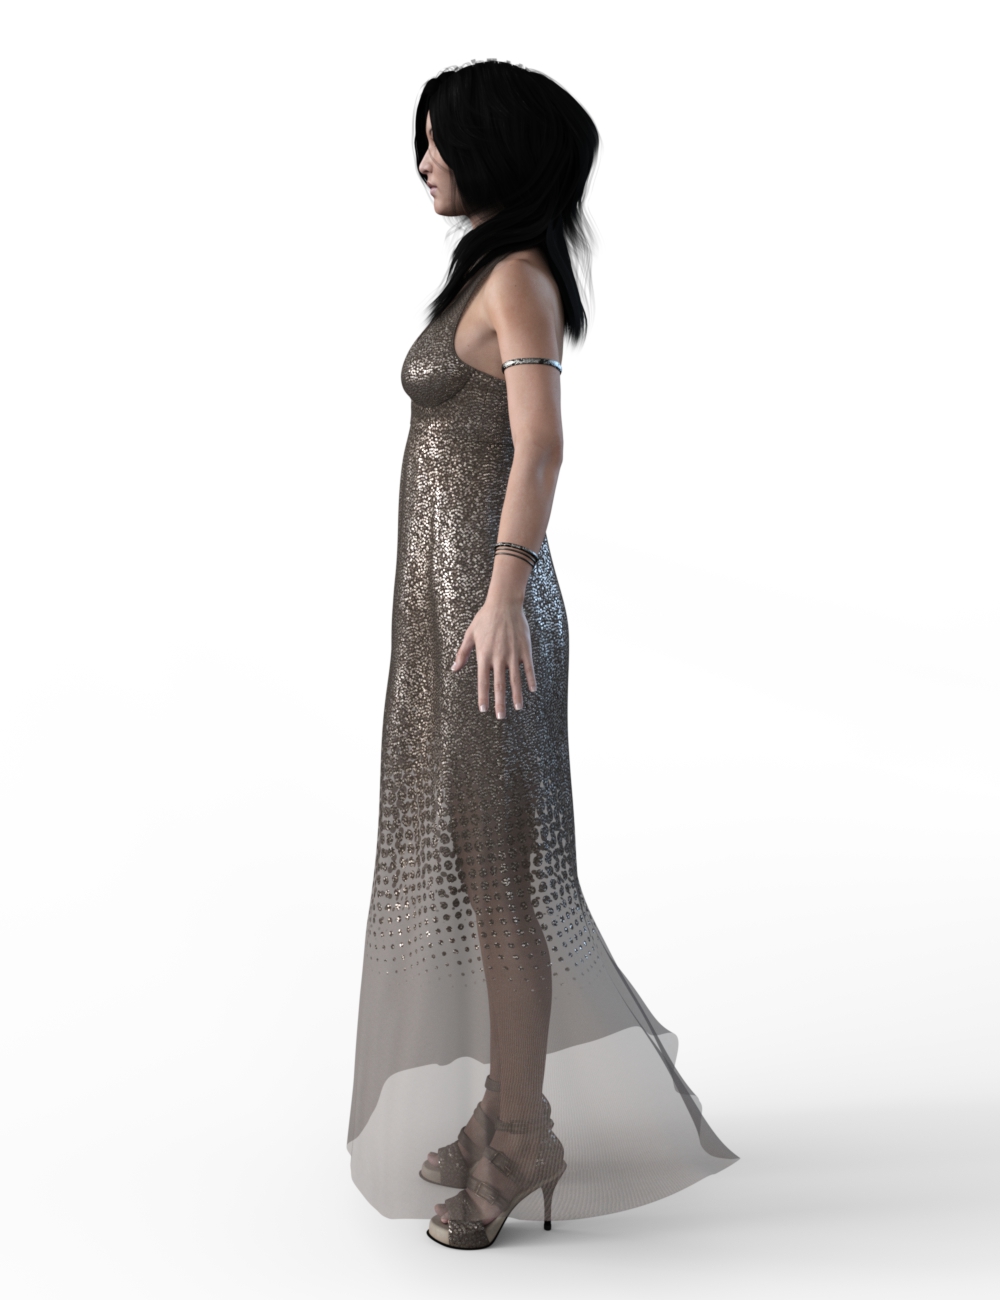 FBX- Mei Lin Maxi Dress Outfit by: Paleo, 3D Models by Daz 3D